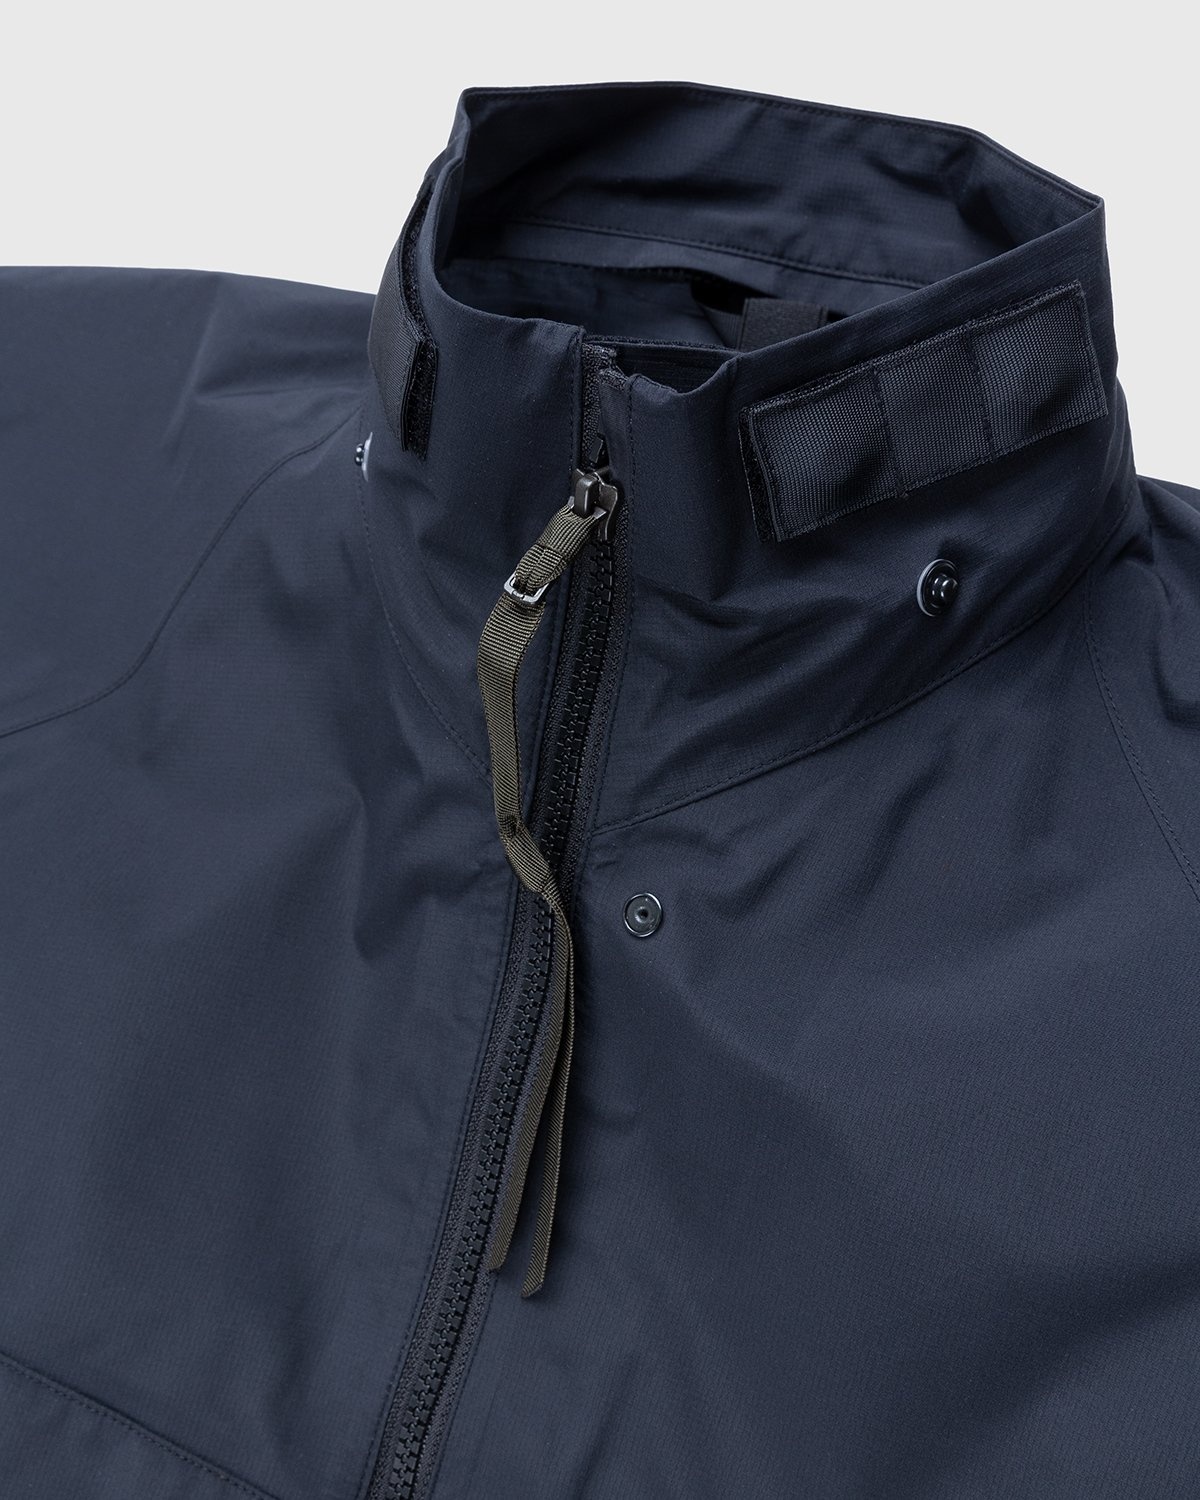 ACRONYM – J96-GT Jacket Black - Outerwear - Black - Image 6